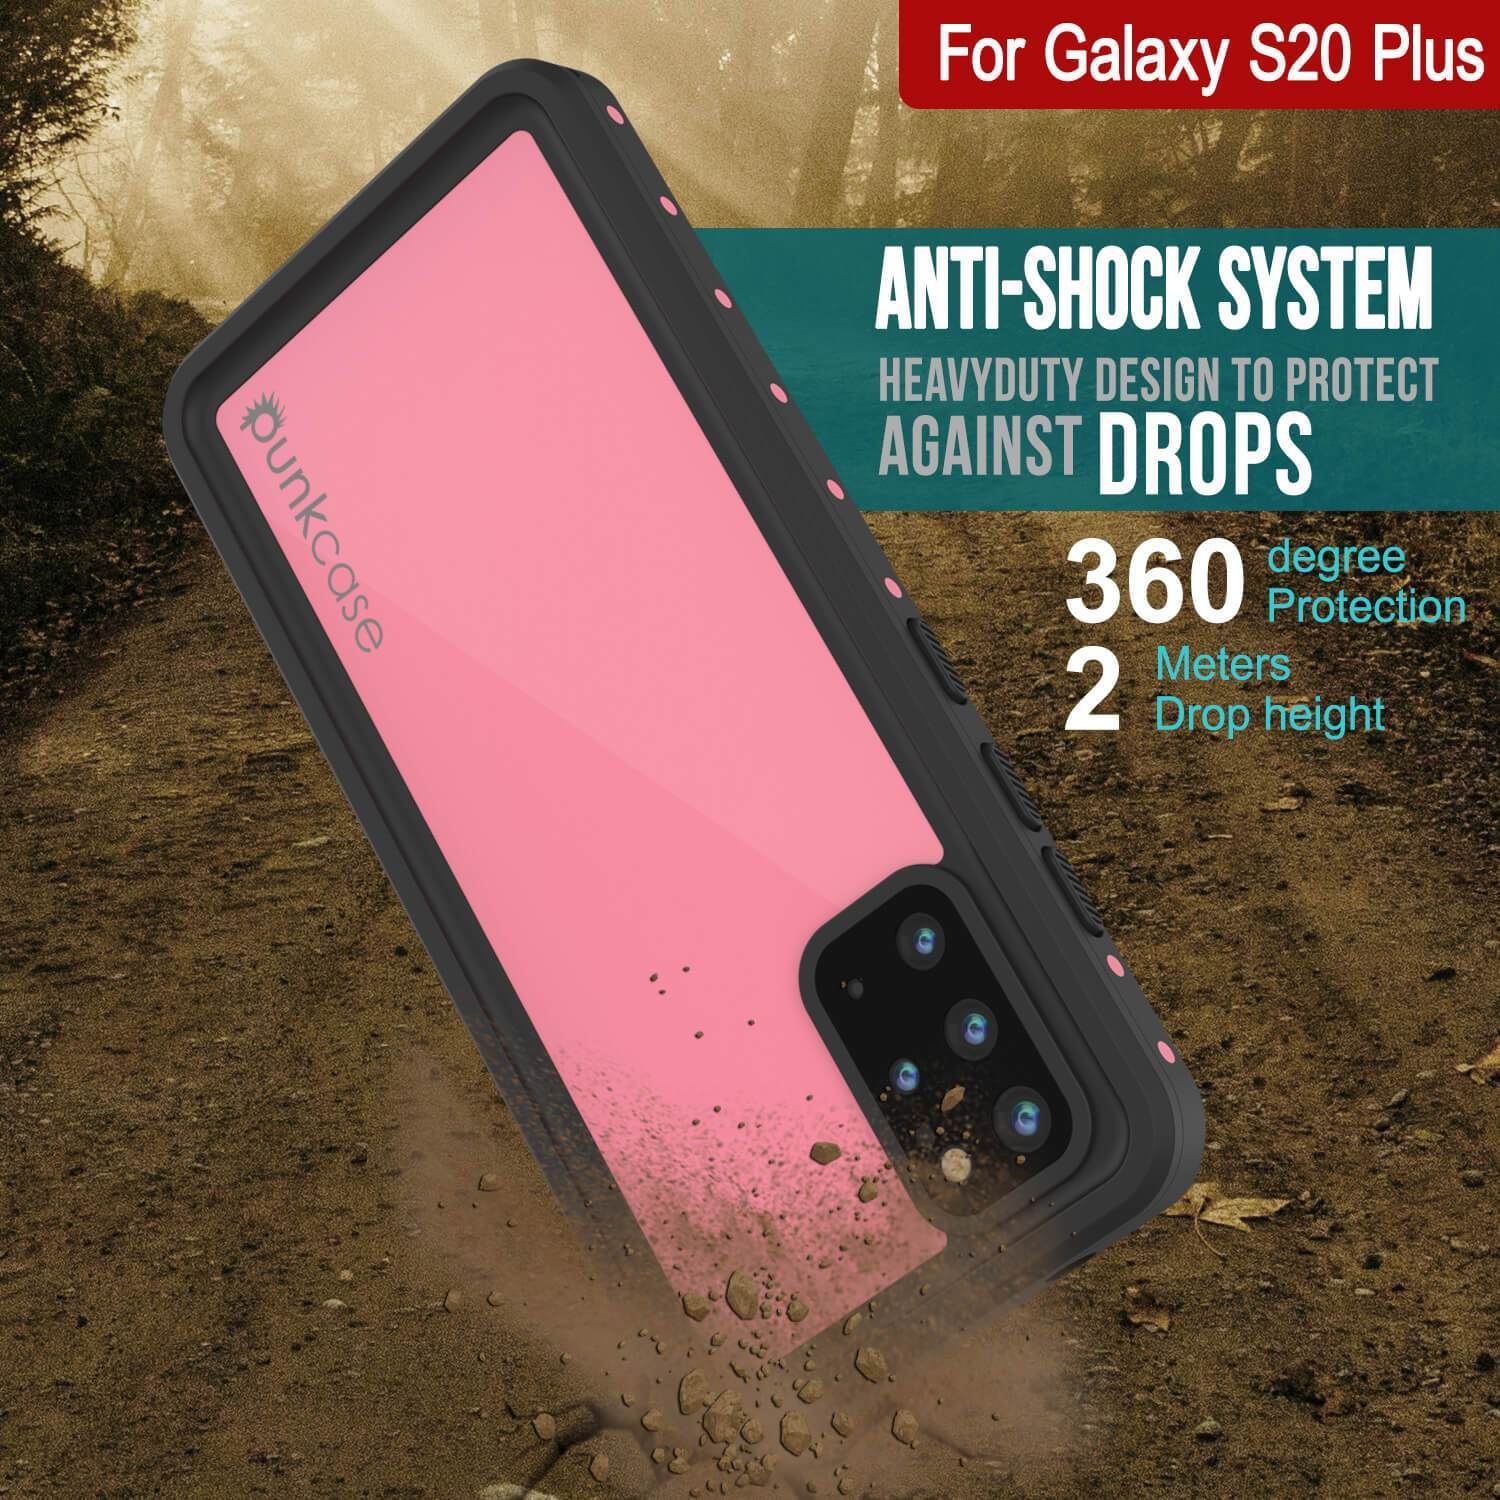 Galaxy S20+ Plus Waterproof Case PunkCase StudStar Pink Thin 6.6ft Underwater IP68 Shock/Snow Proof